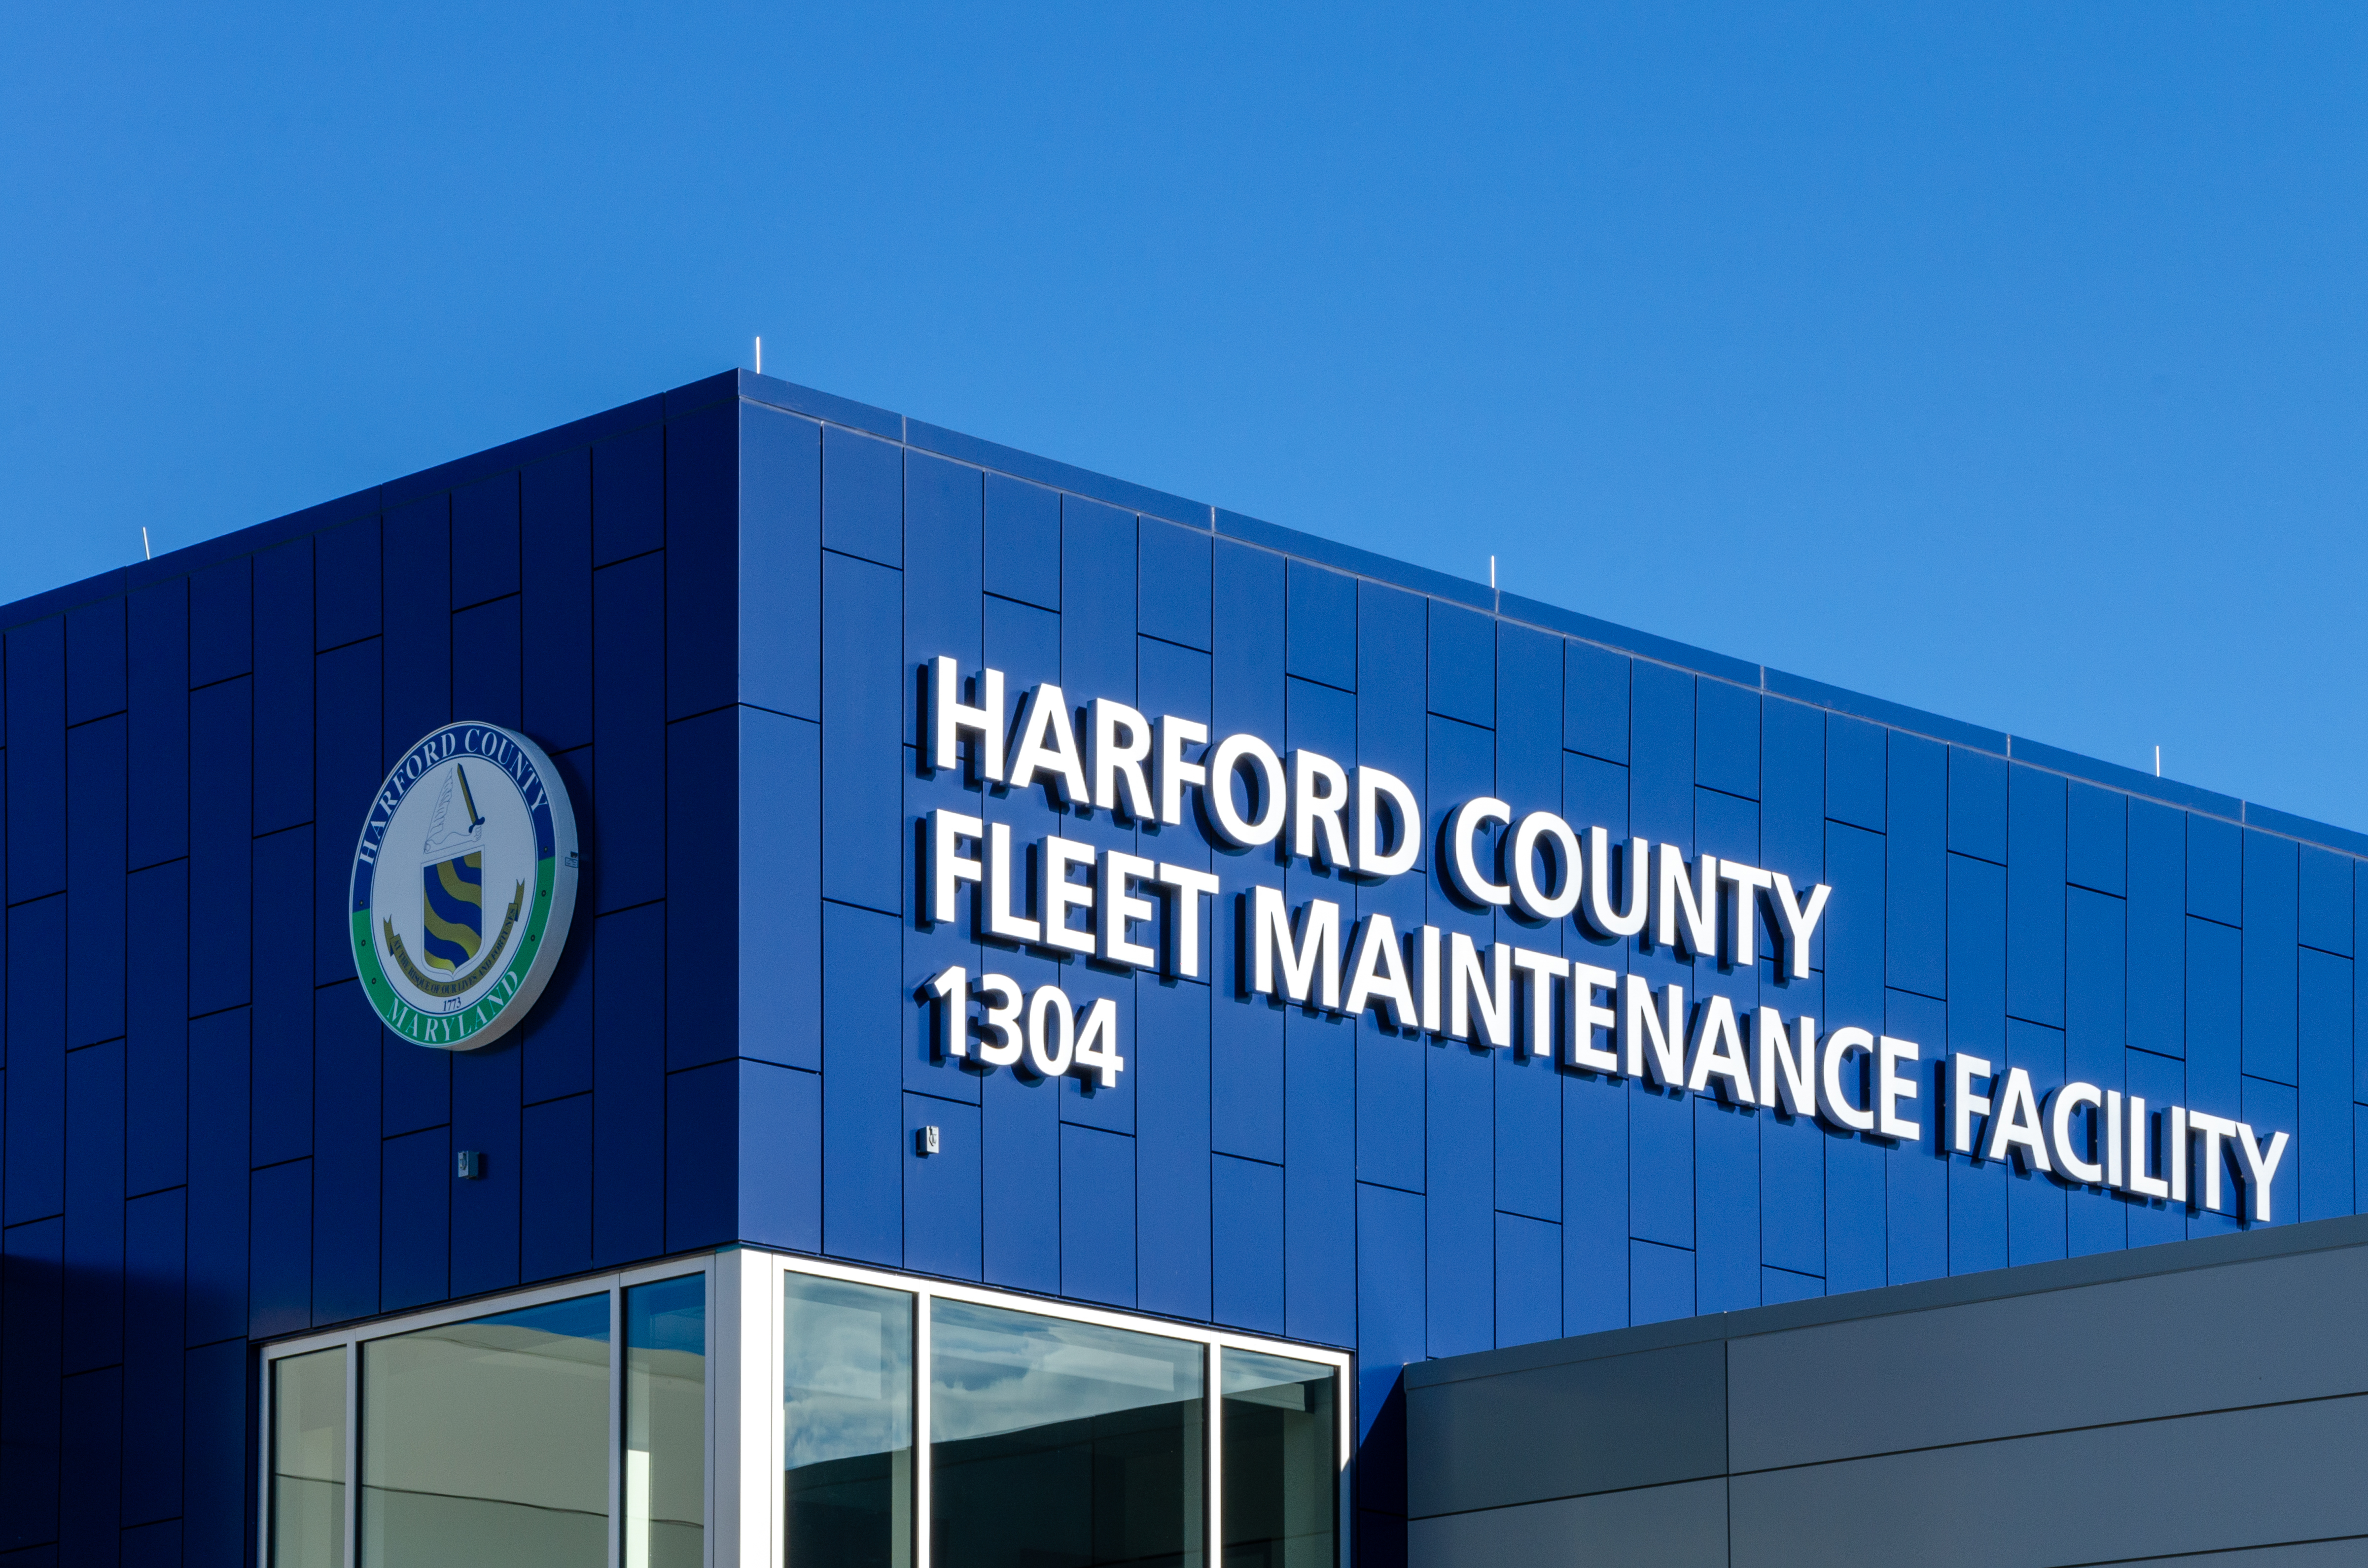 Harford County Fleet Maintenance Facility